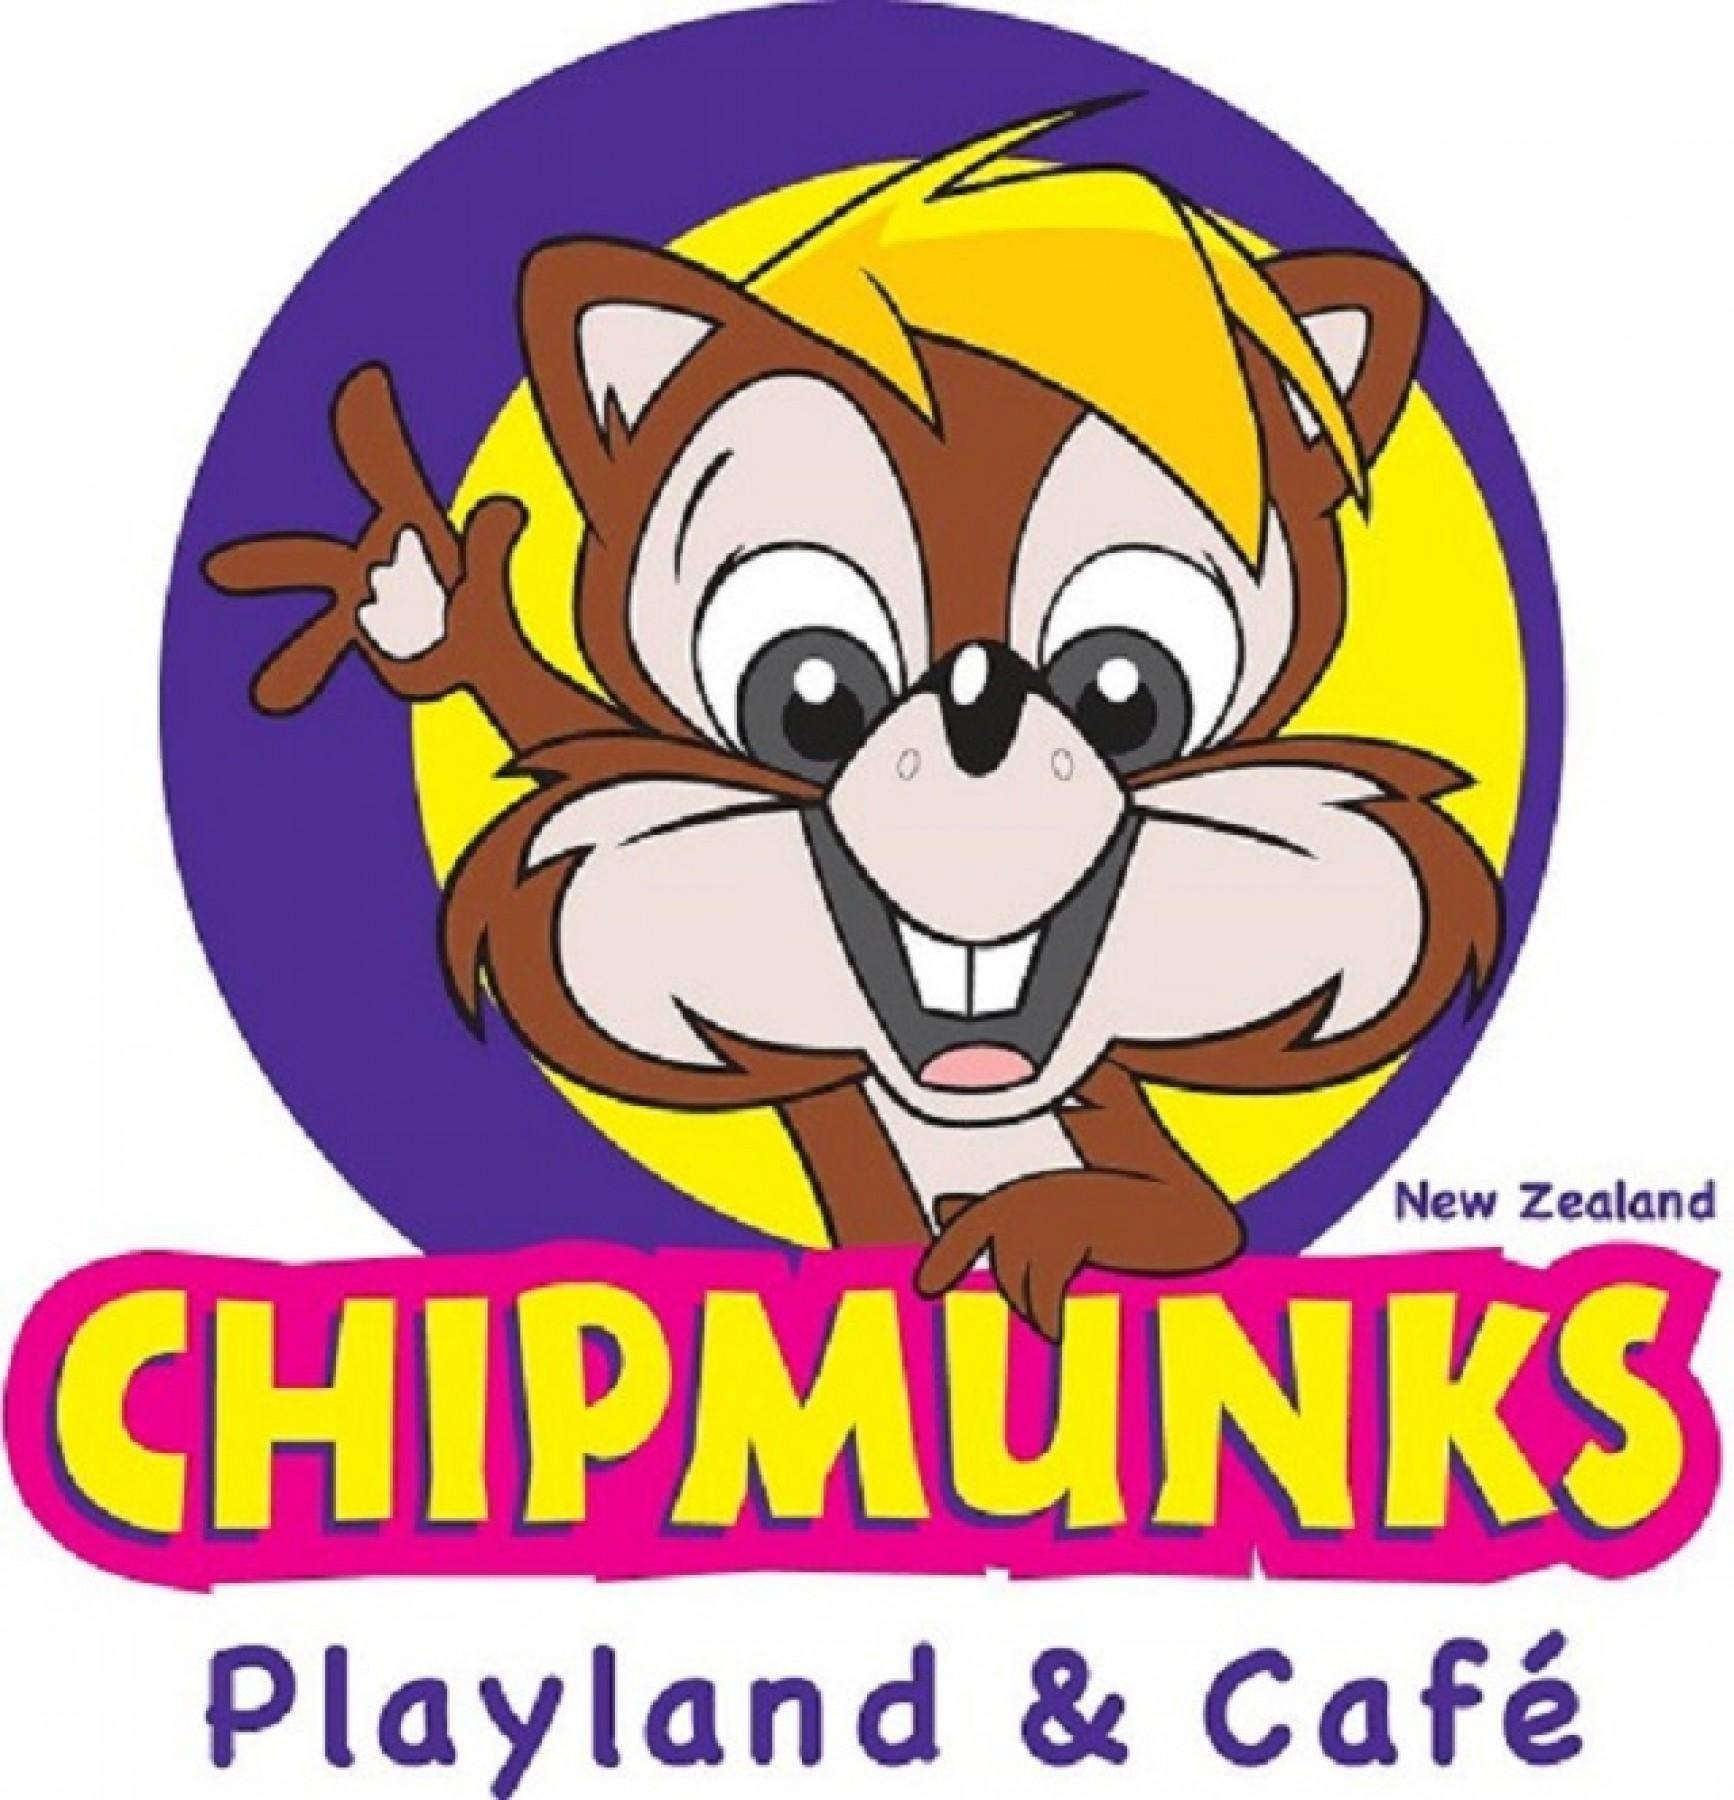 Children's Playland & Cafe Franchise Chipmunks - Perth